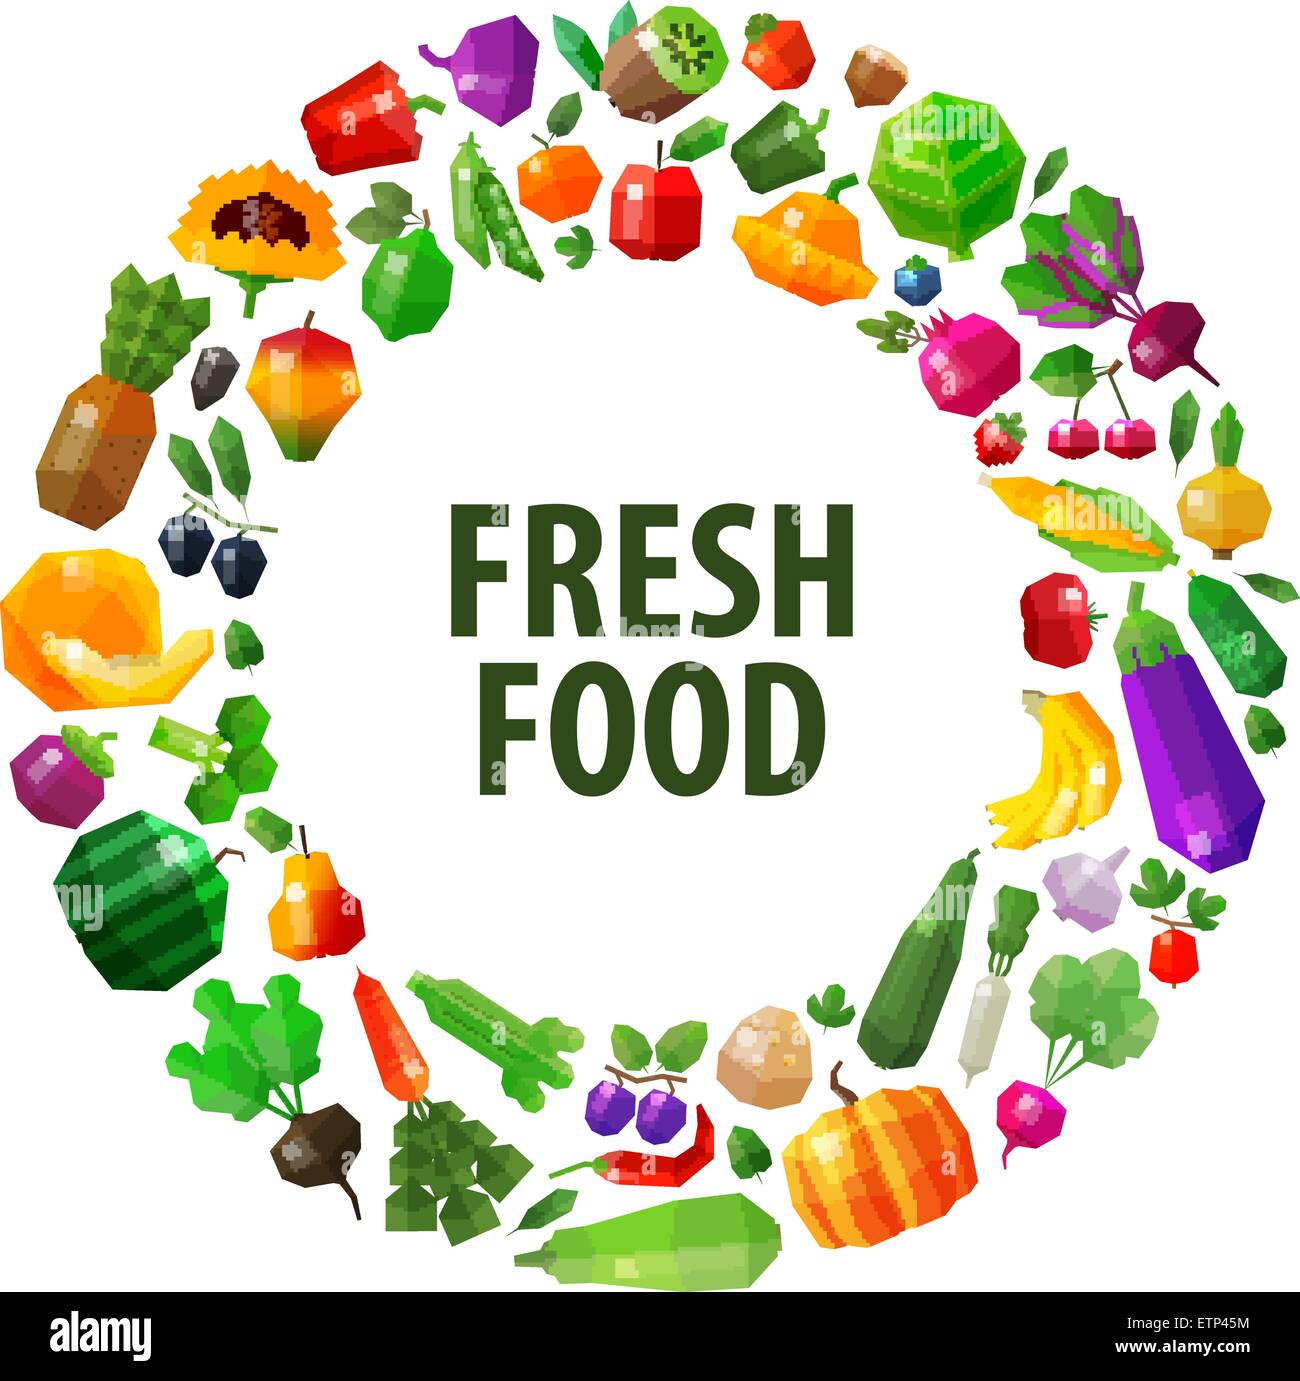 Logo Fresh Food | estudioespositoymiguel.com.ar